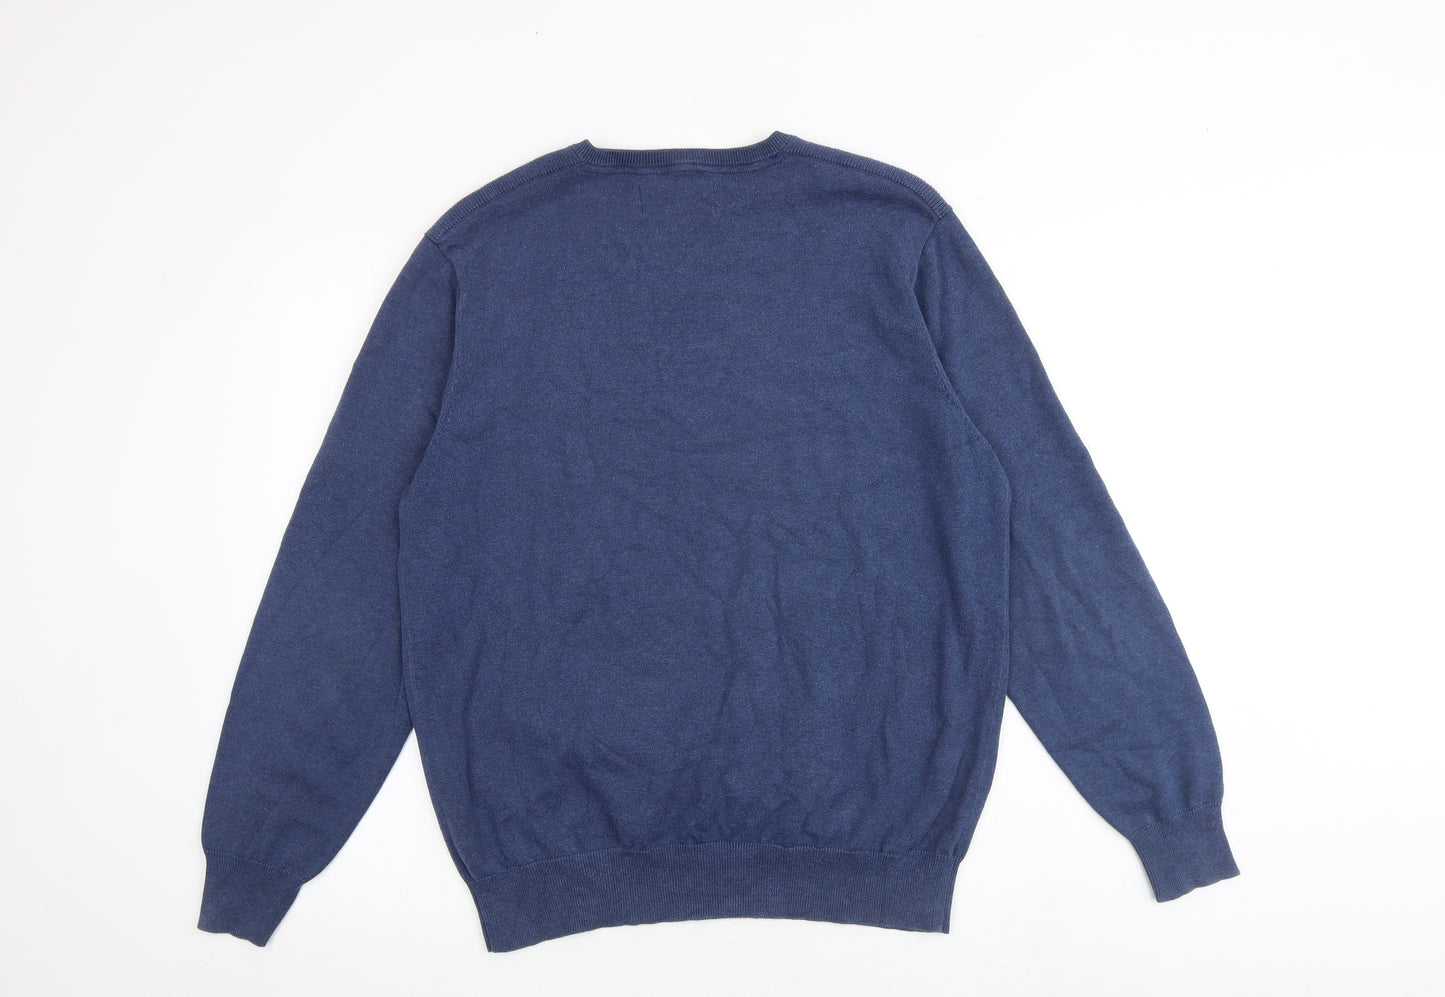 Jasper Conran Mens Blue V-Neck Cotton Pullover Jumper Size L Long Sleeve